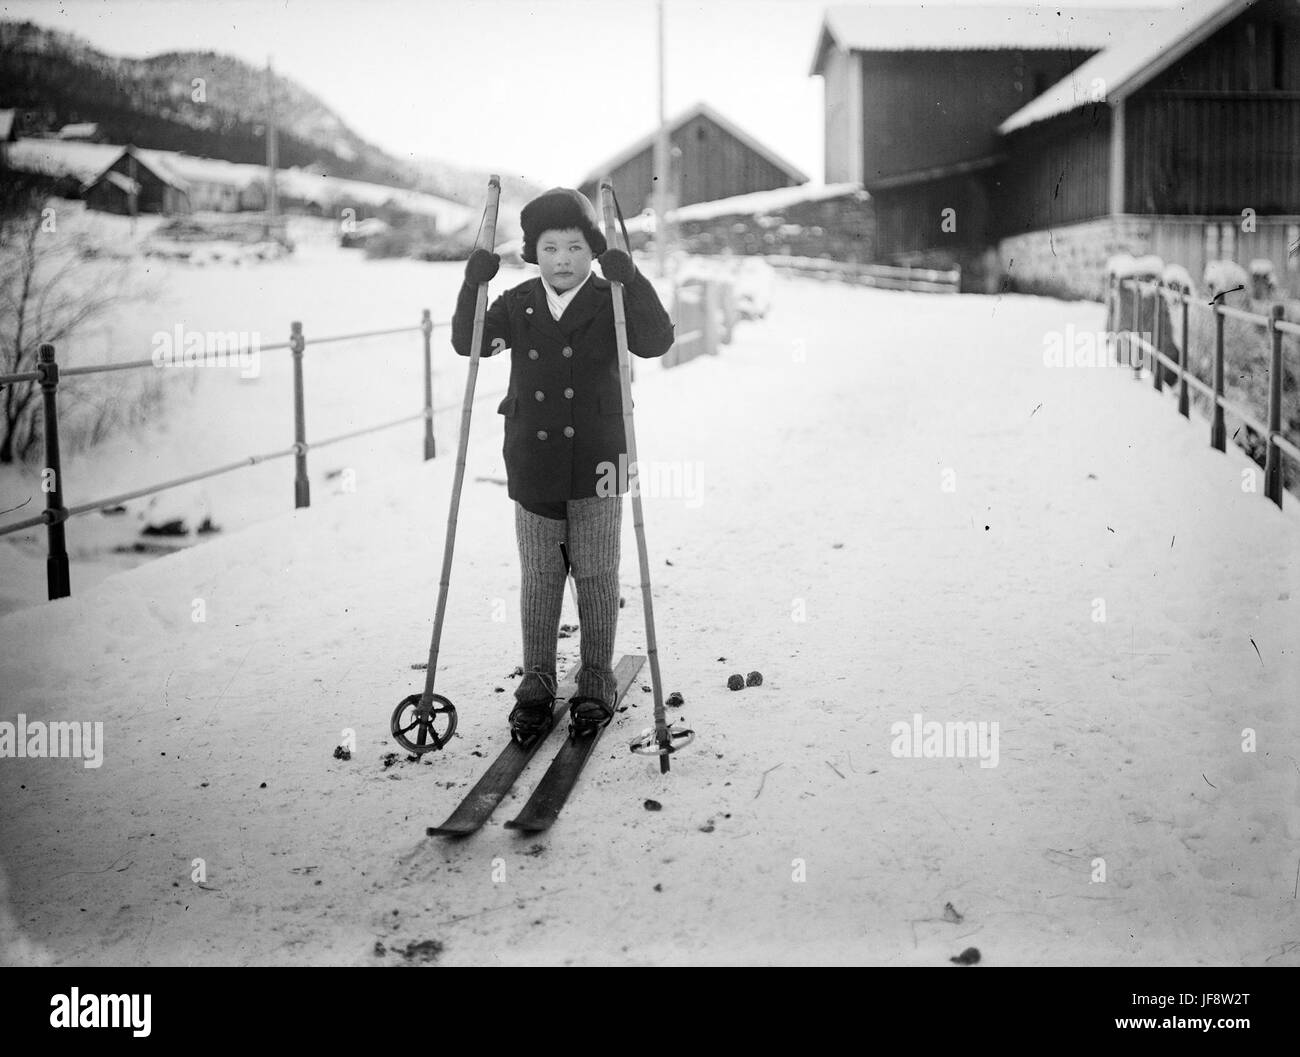 Boy skiing, ca 1915-1925 32755262373 o Stock Photo